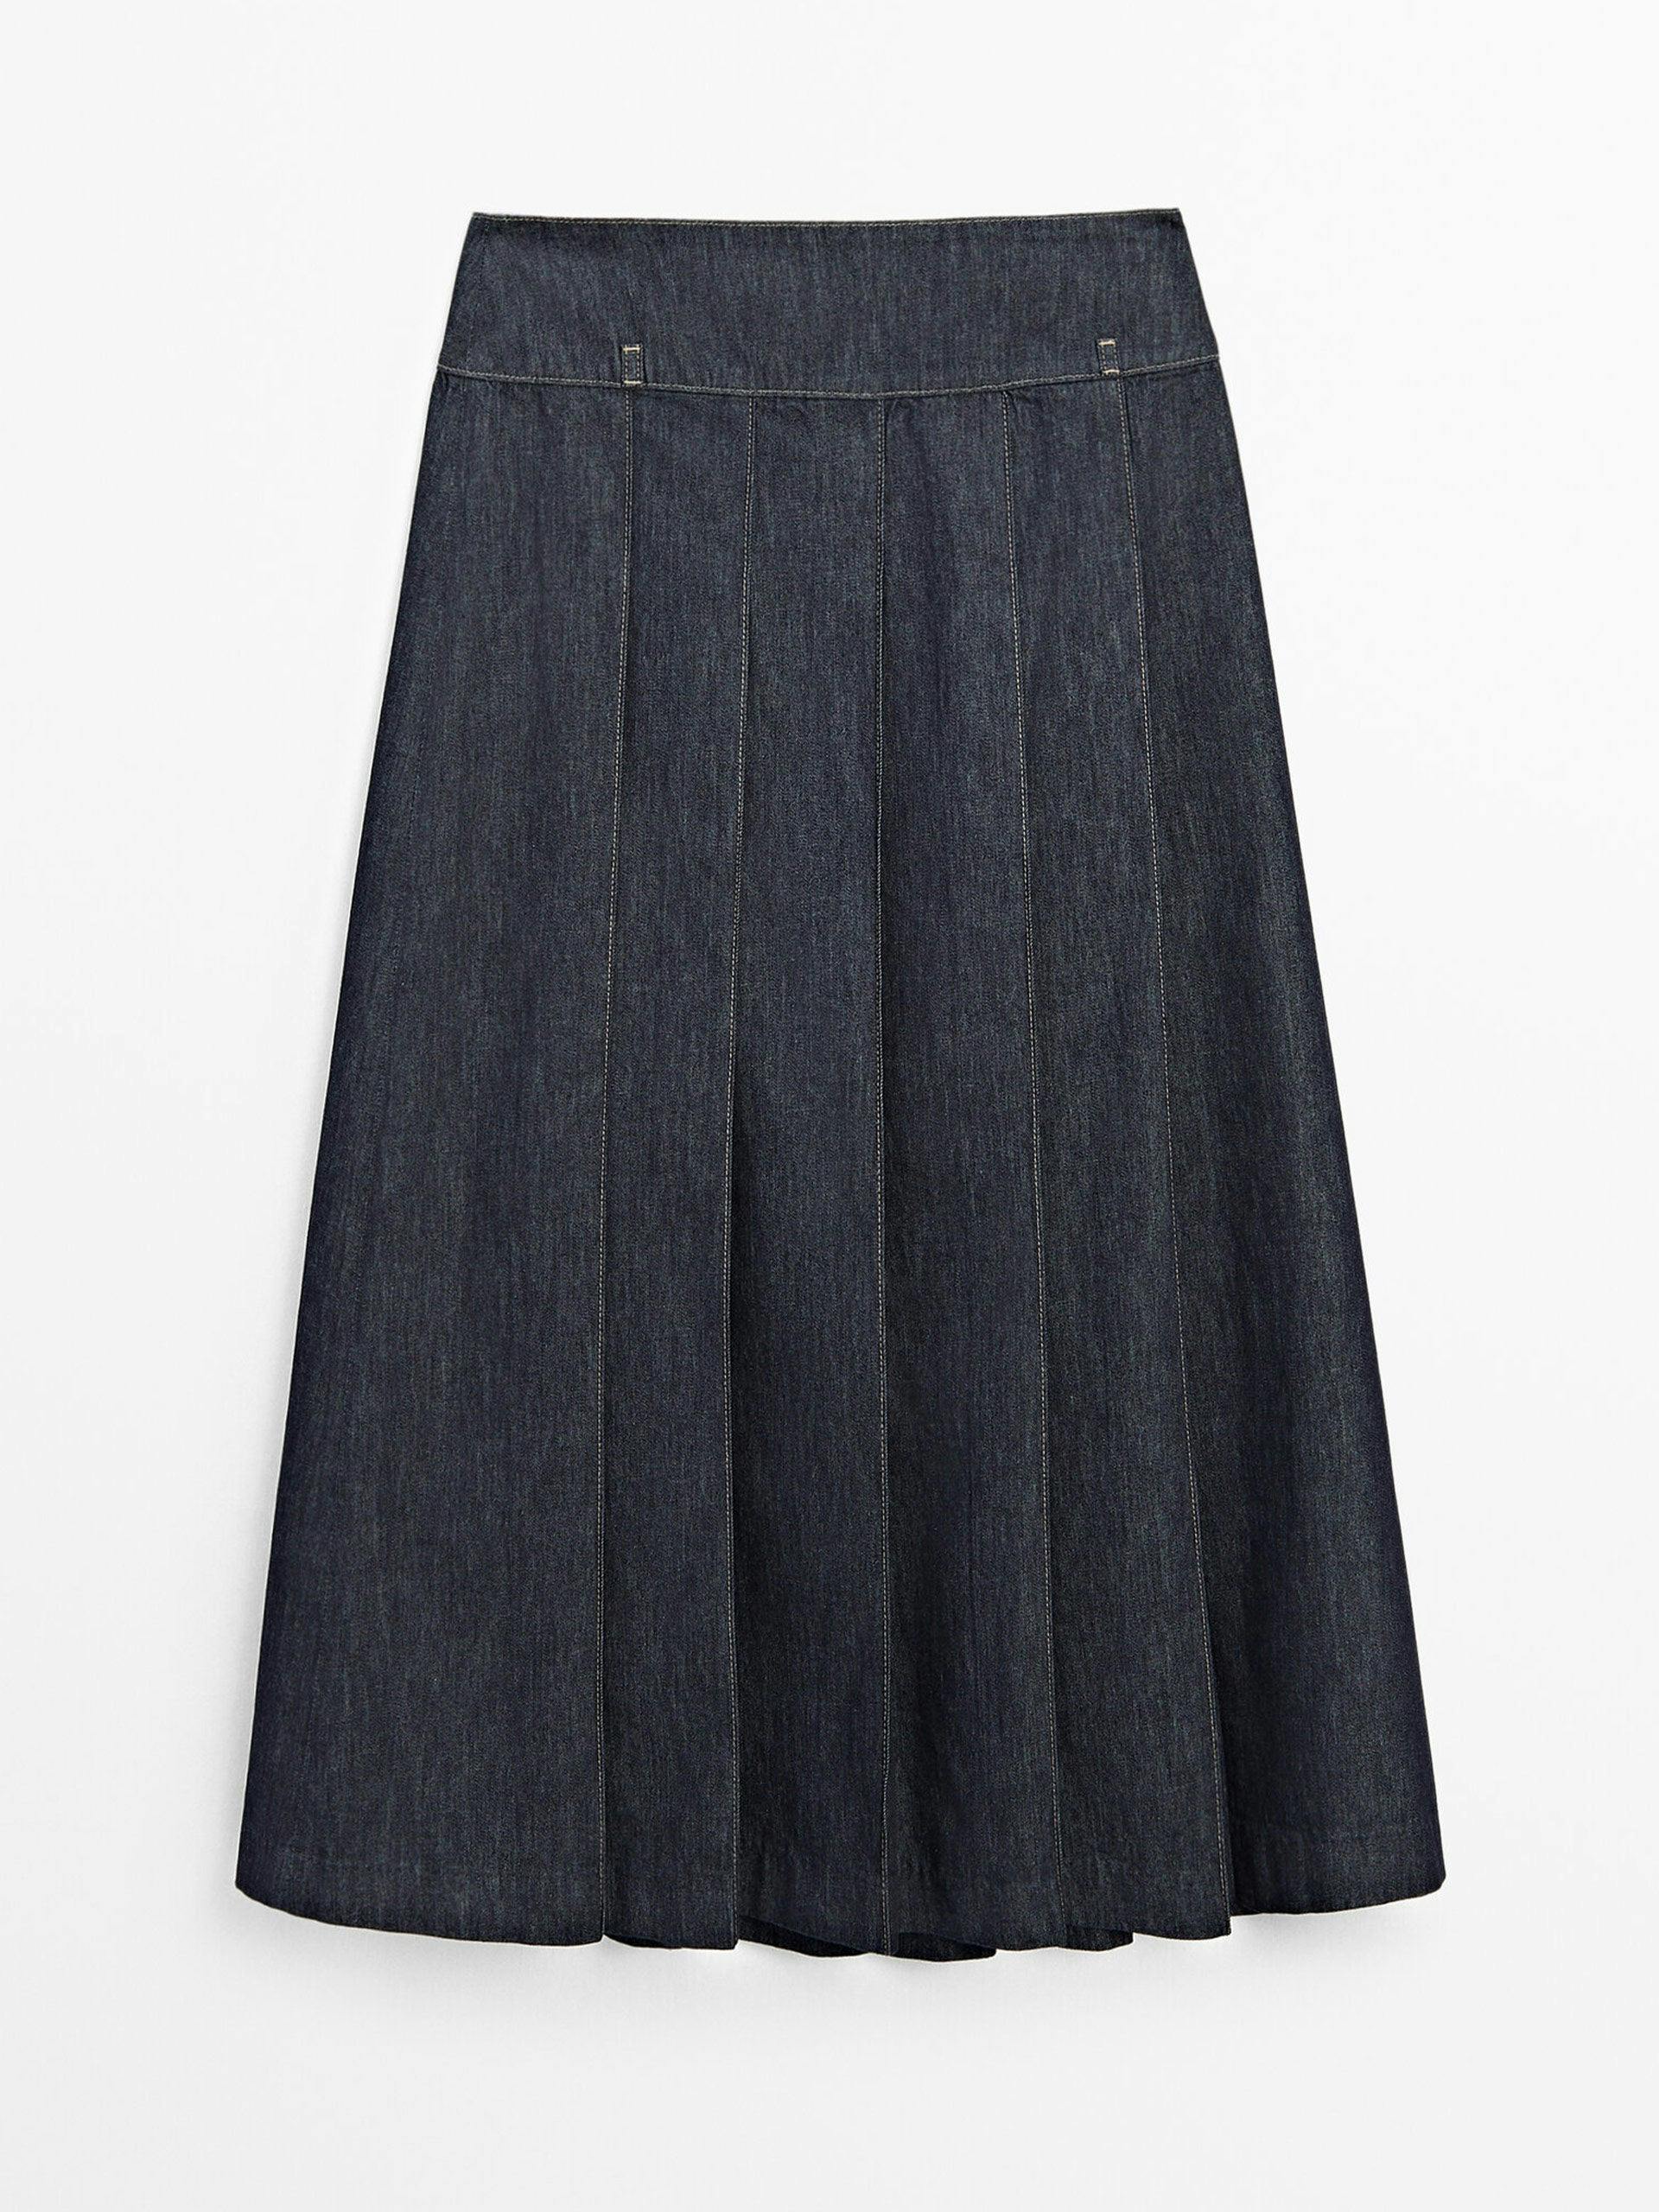 Denim flounce midi skirt with seams